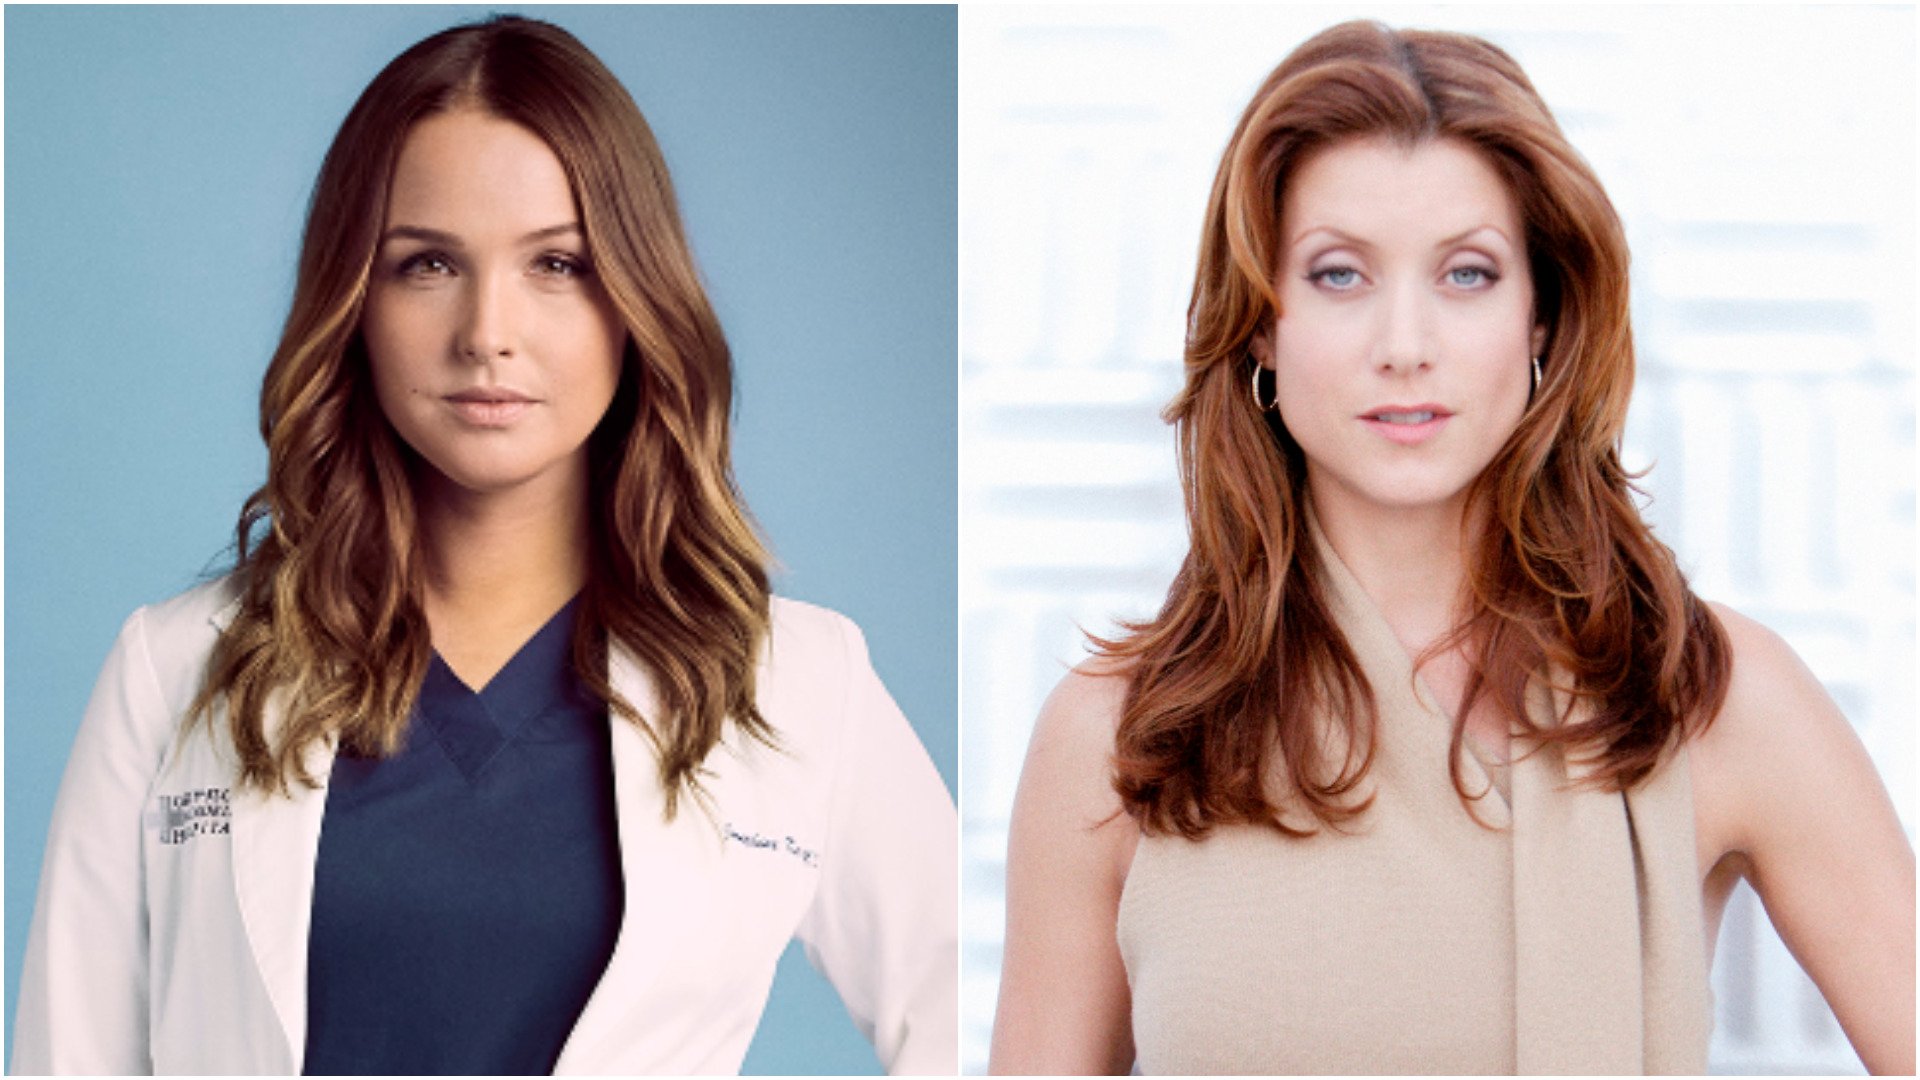 Headshots of Camilla Luddington as Jo Wilson and Kate Walsh as Addison Montgomery from ‘Grey’s Anatomy’